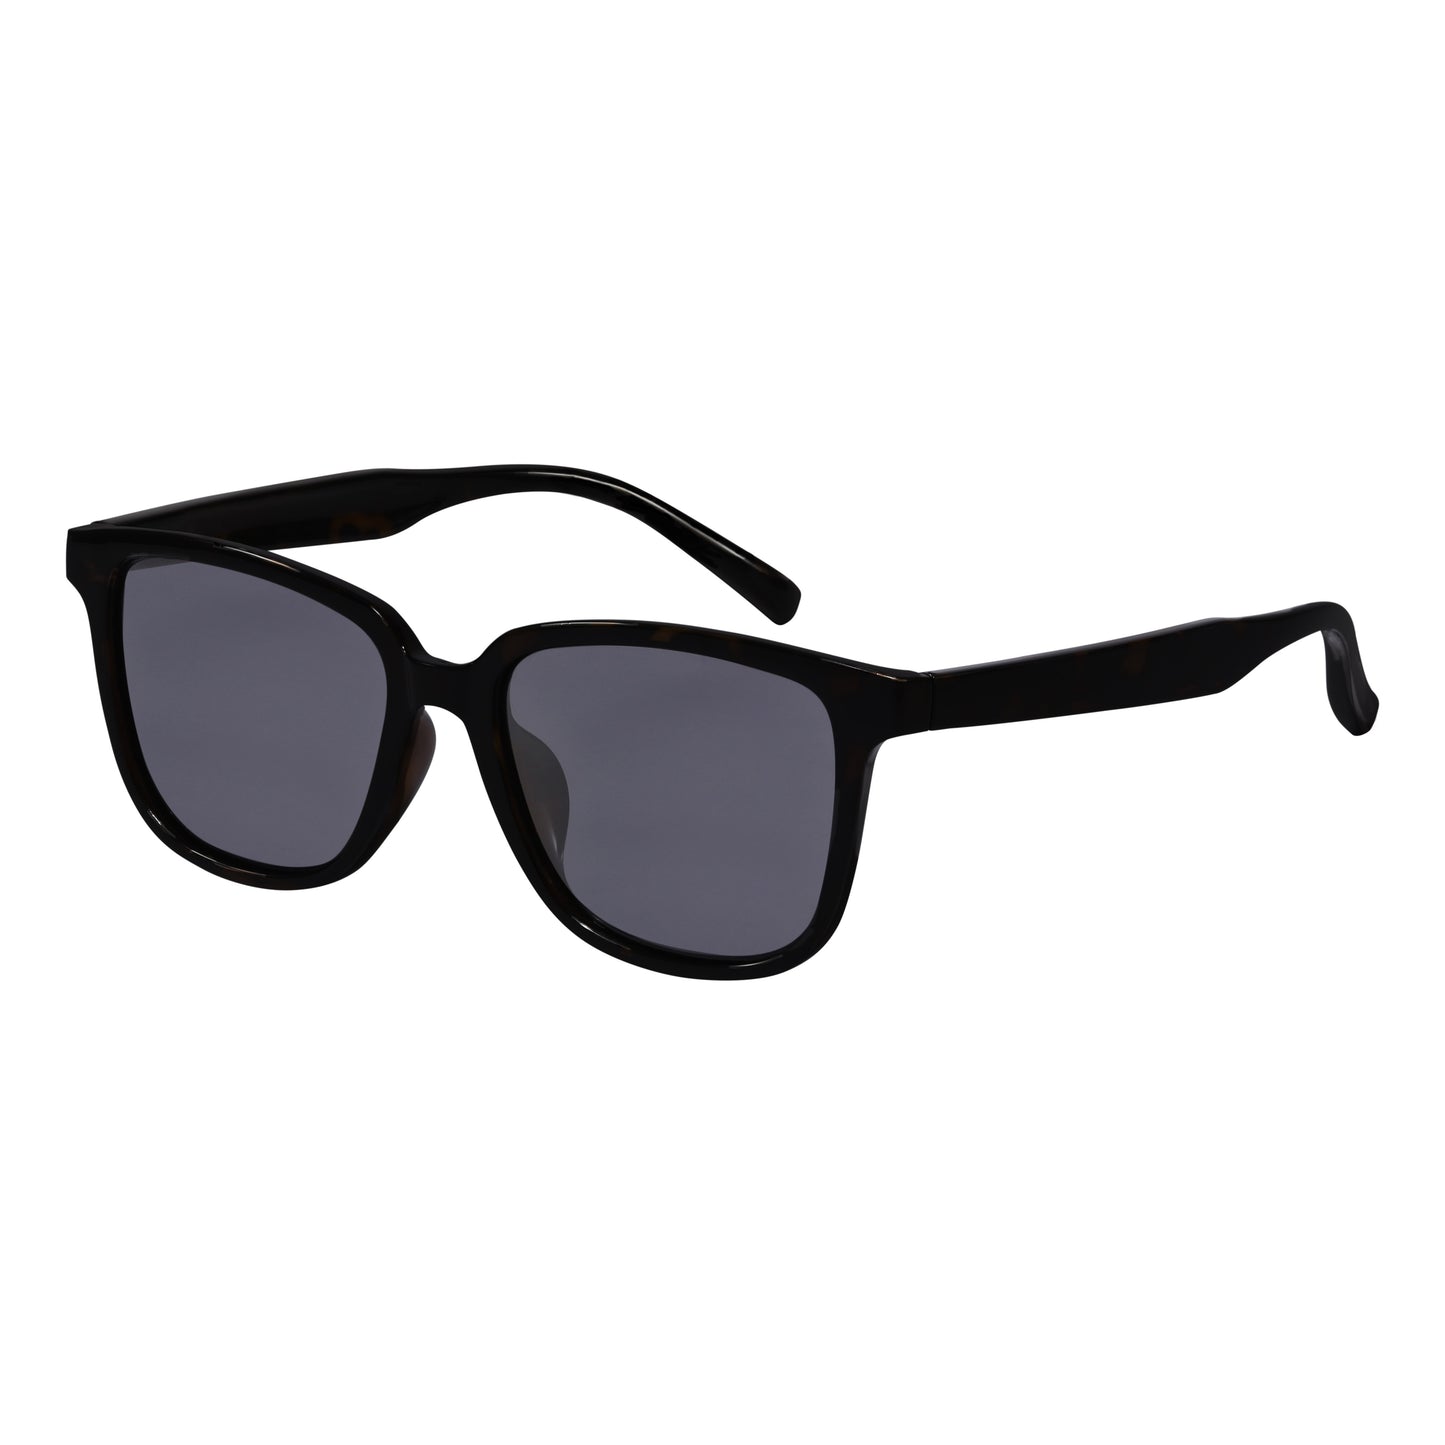 JAMILA recycled sunglasses black